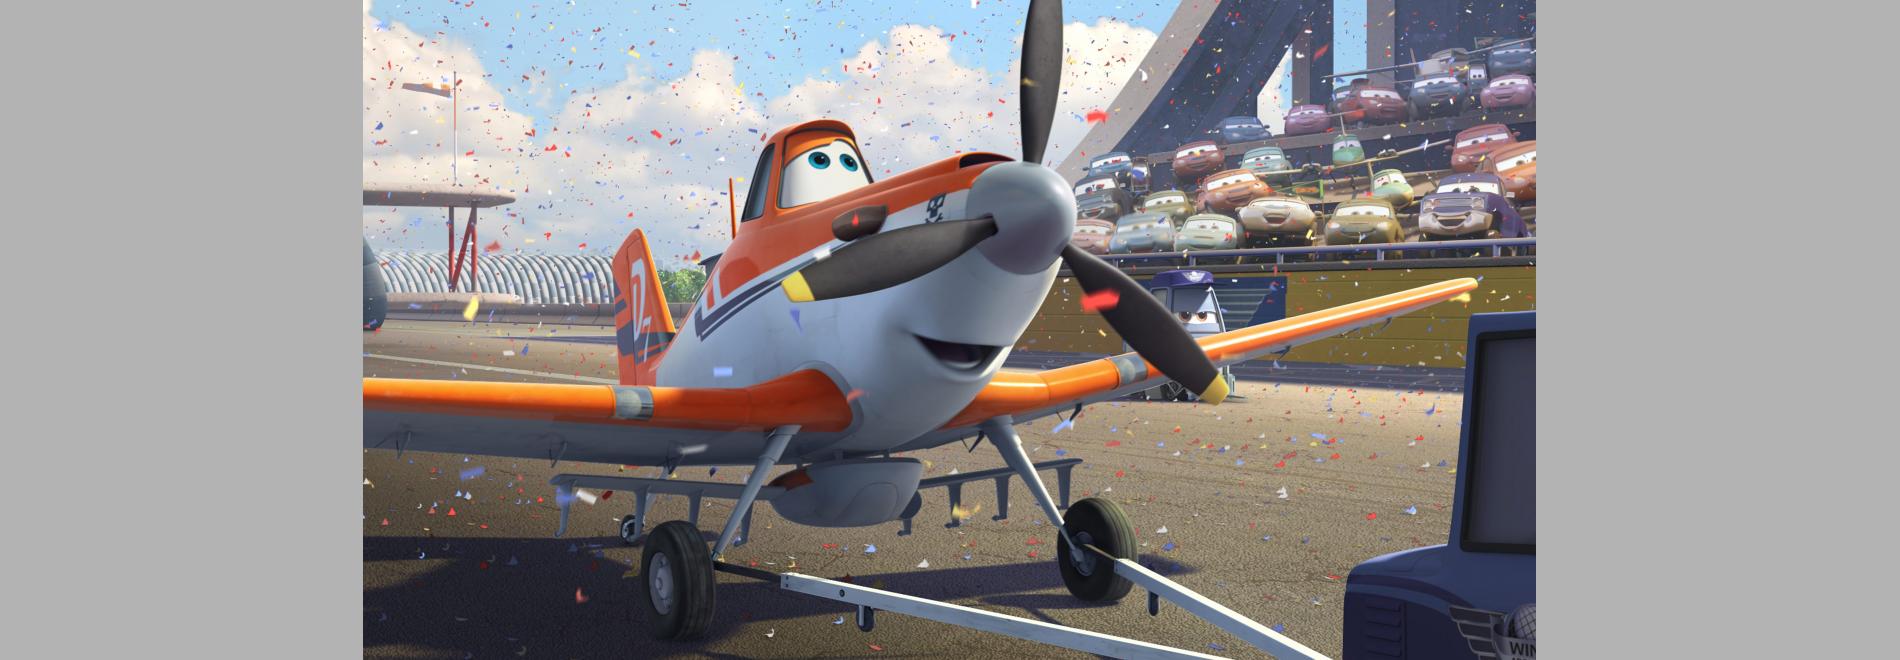 Disney’s Planes (Klay Hall, 2013)